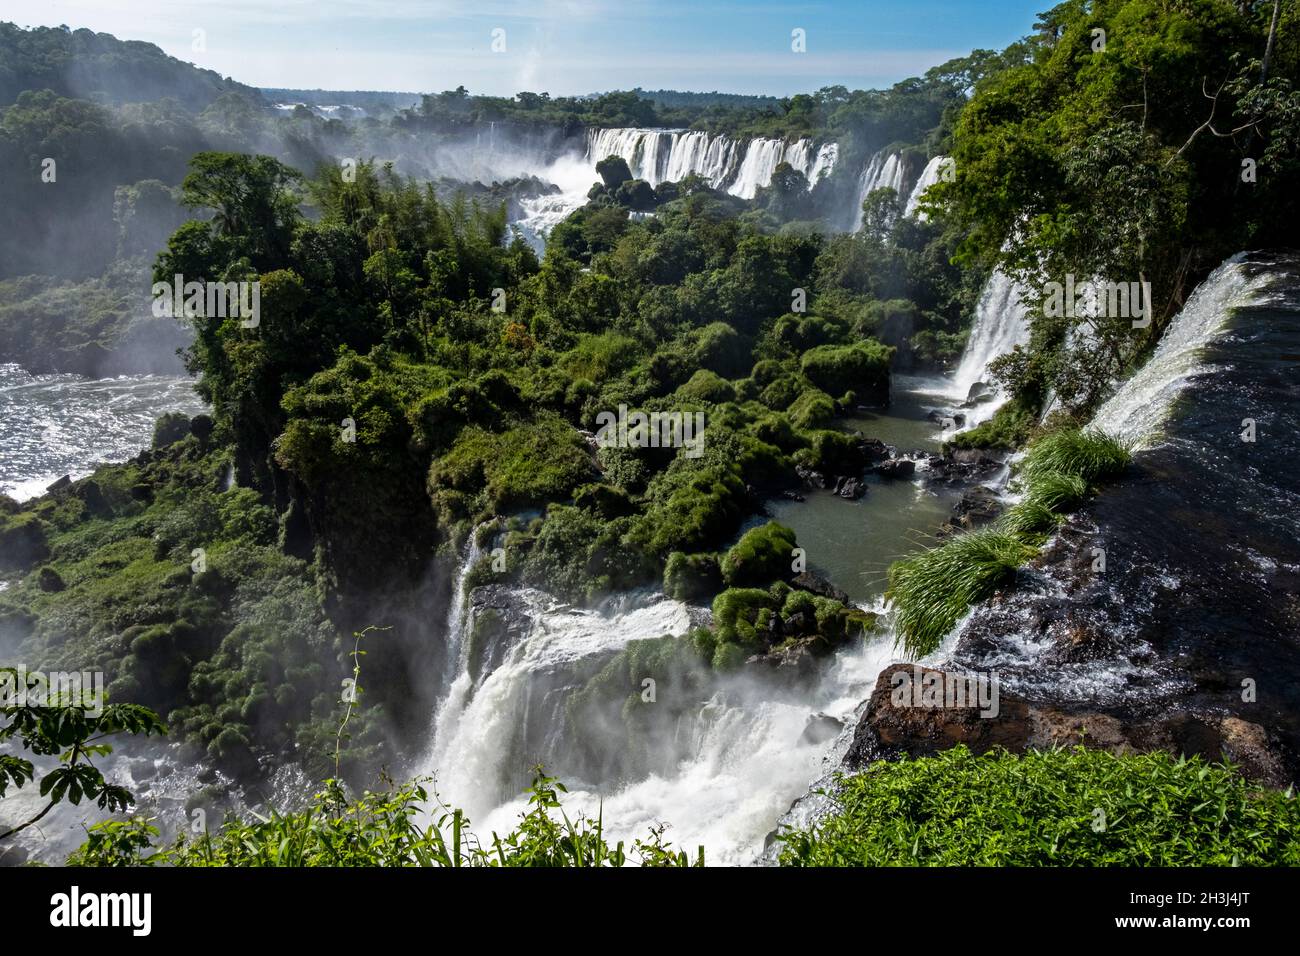 The Iguazu Falls on the border of Argentina and Brazil. Stock Photo